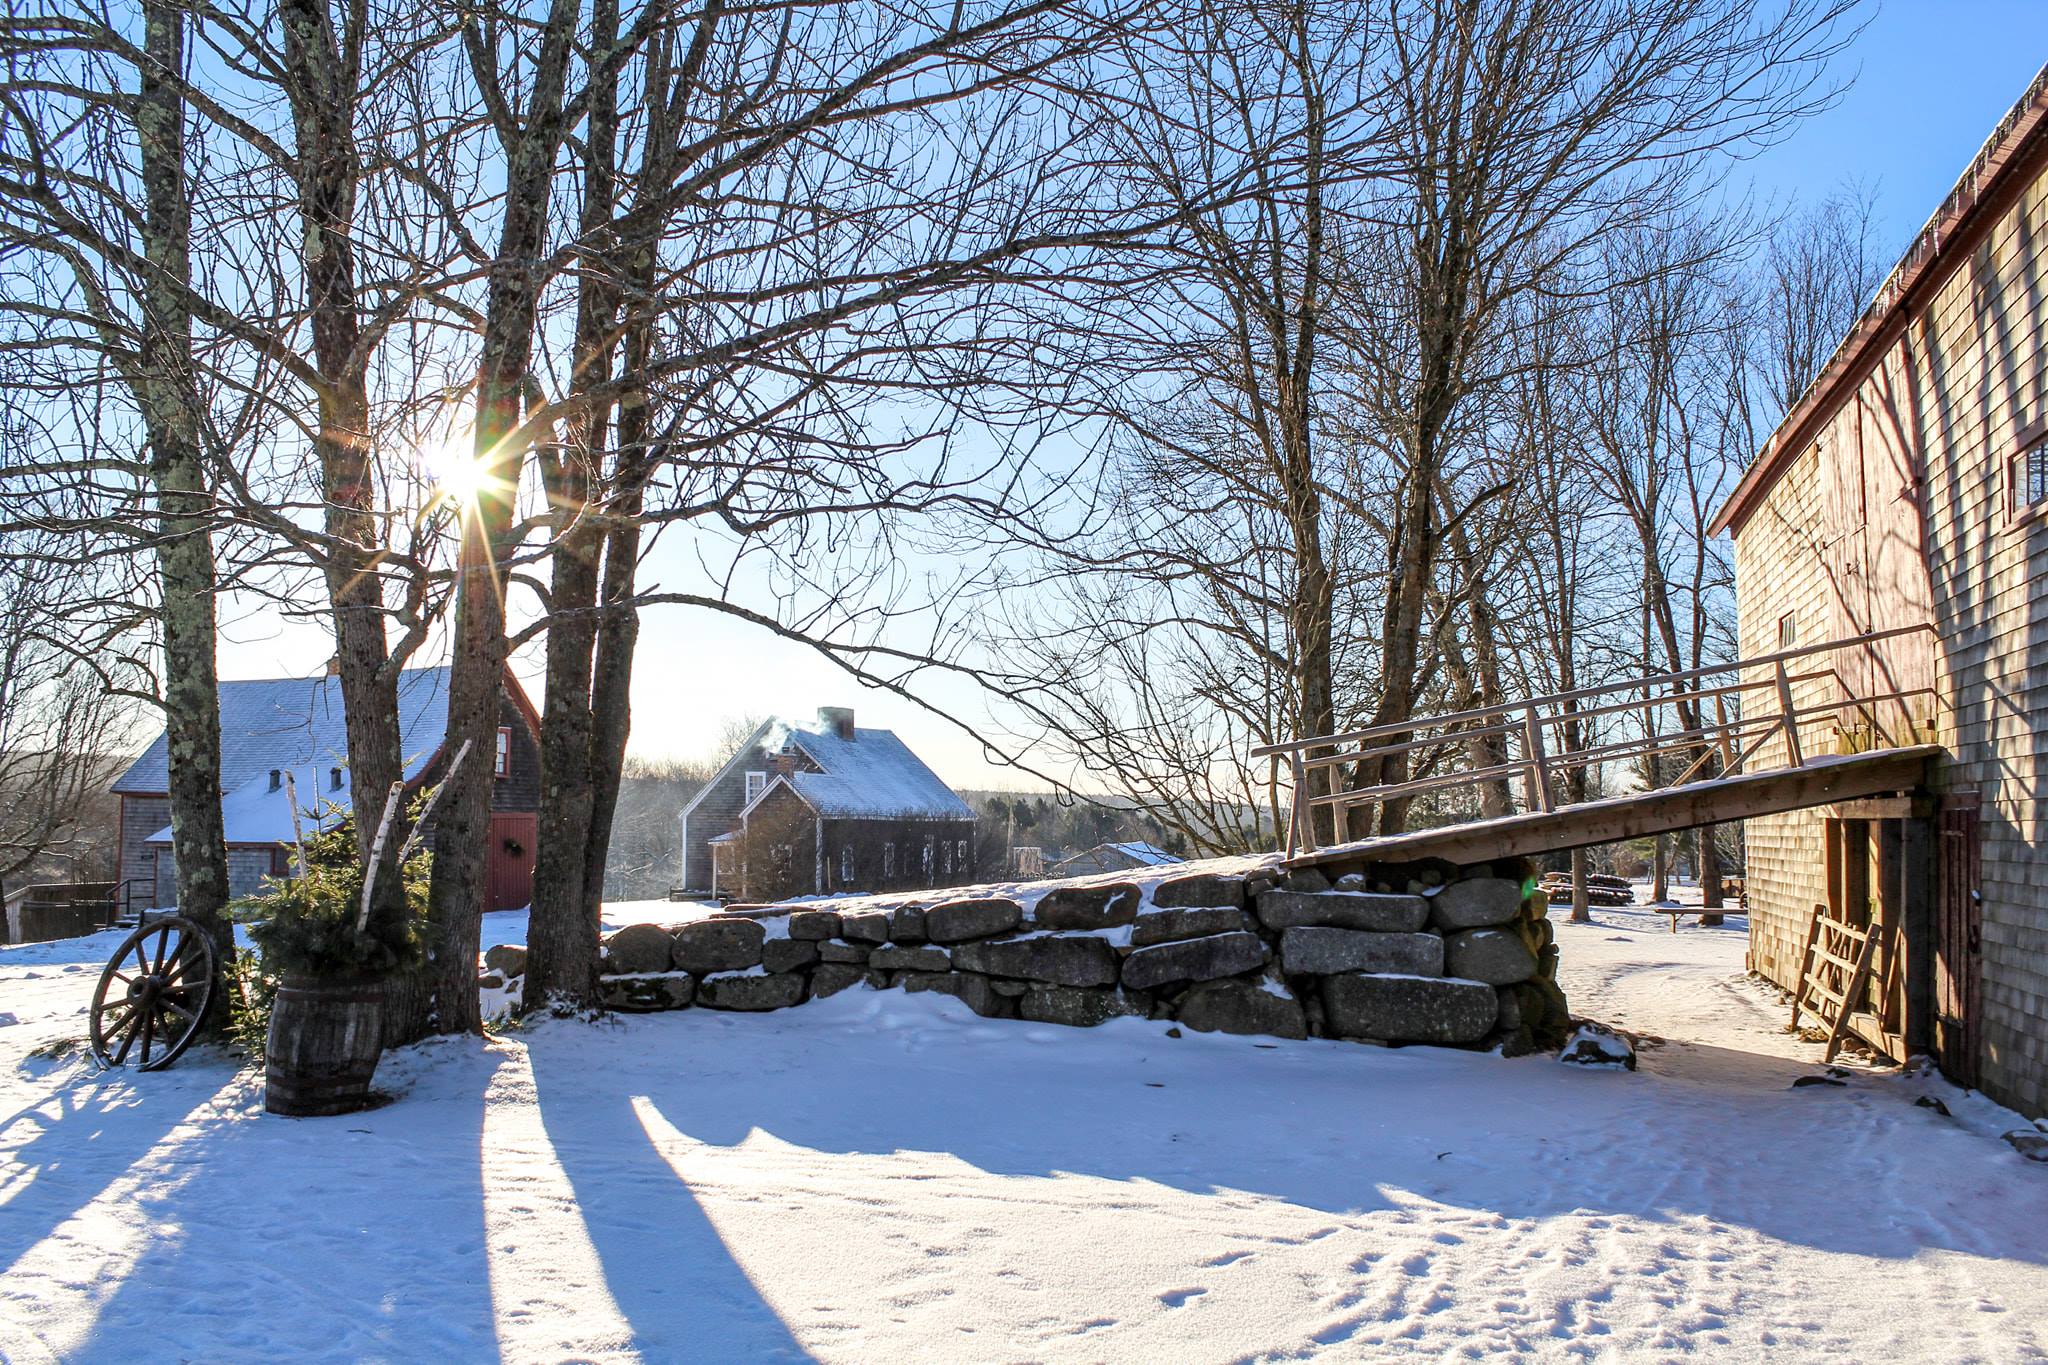 Winter at Ross Farm Museum.